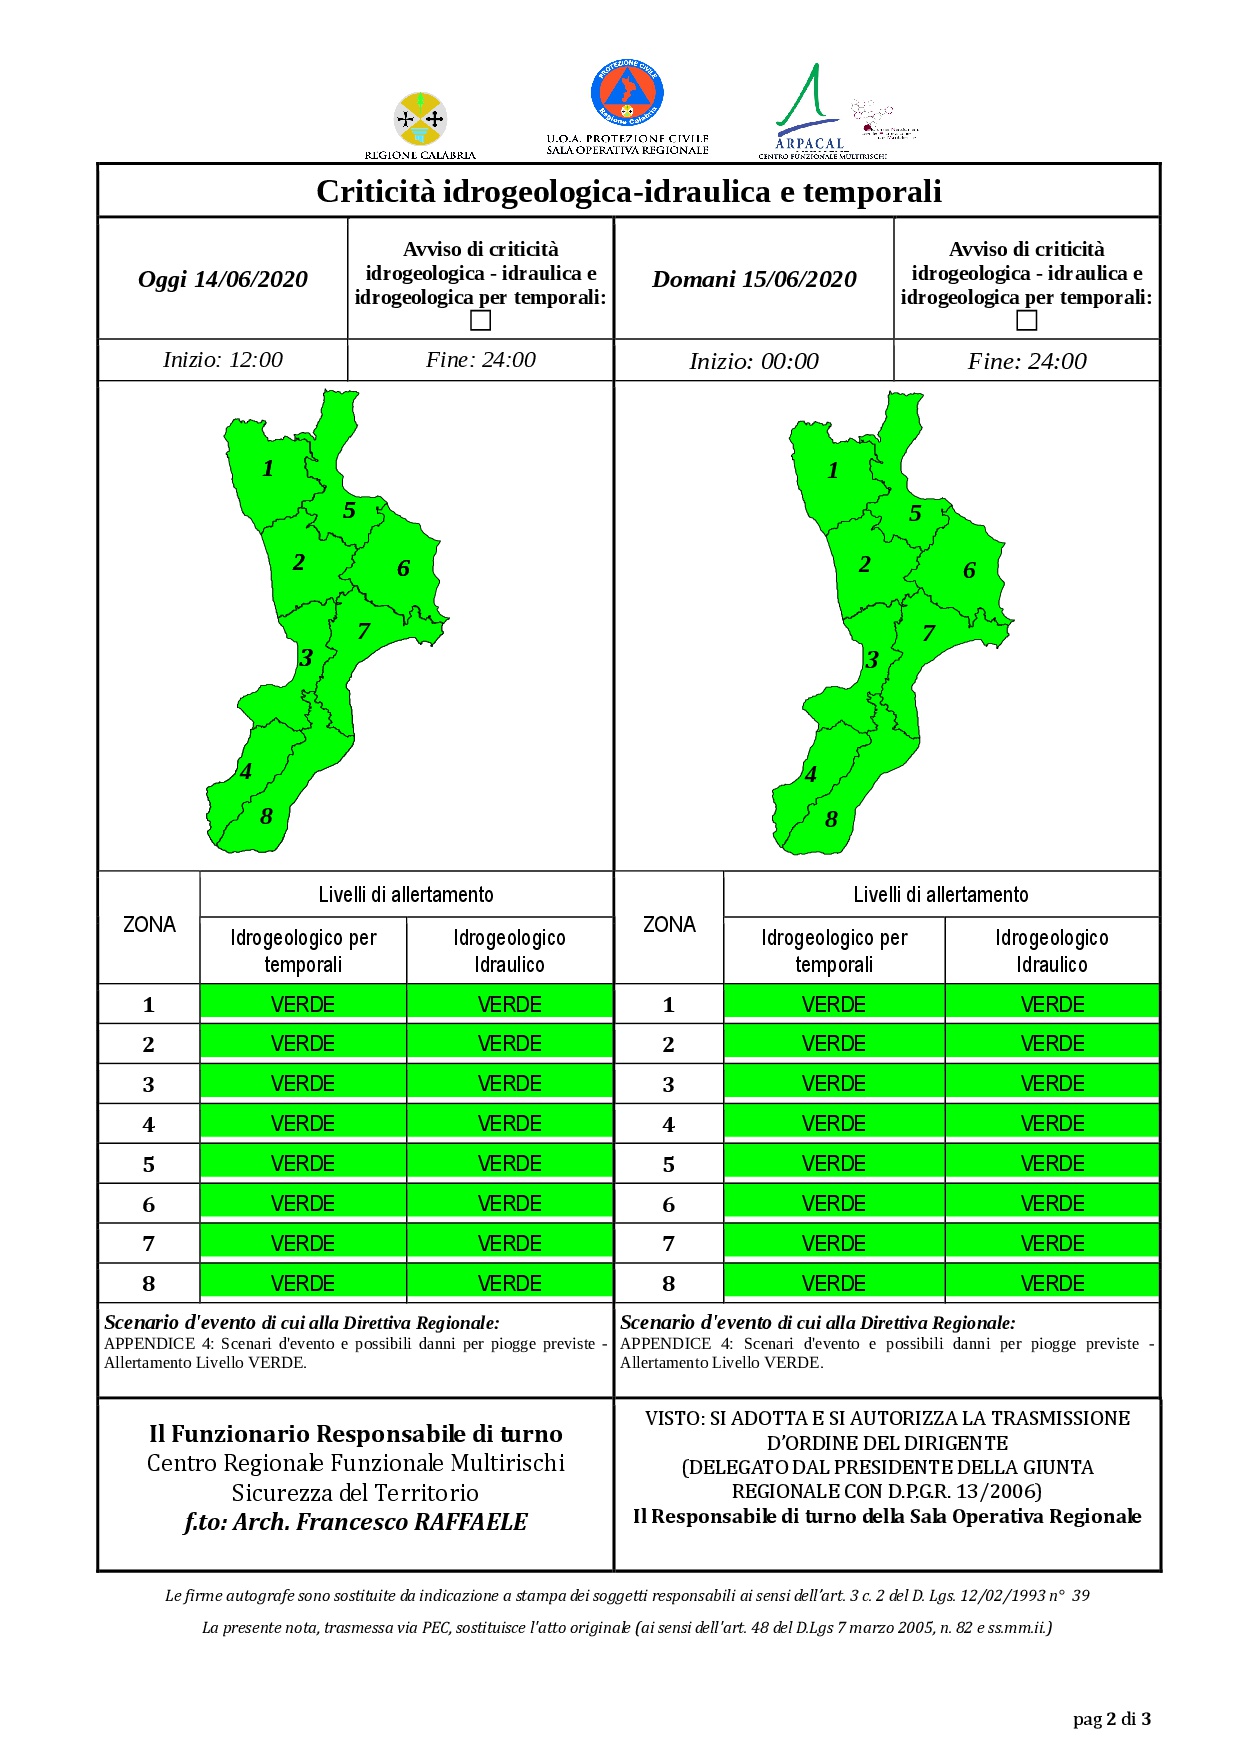 Criticità idrogeologica-idraulica e temporali in Calabria 14-06-2020